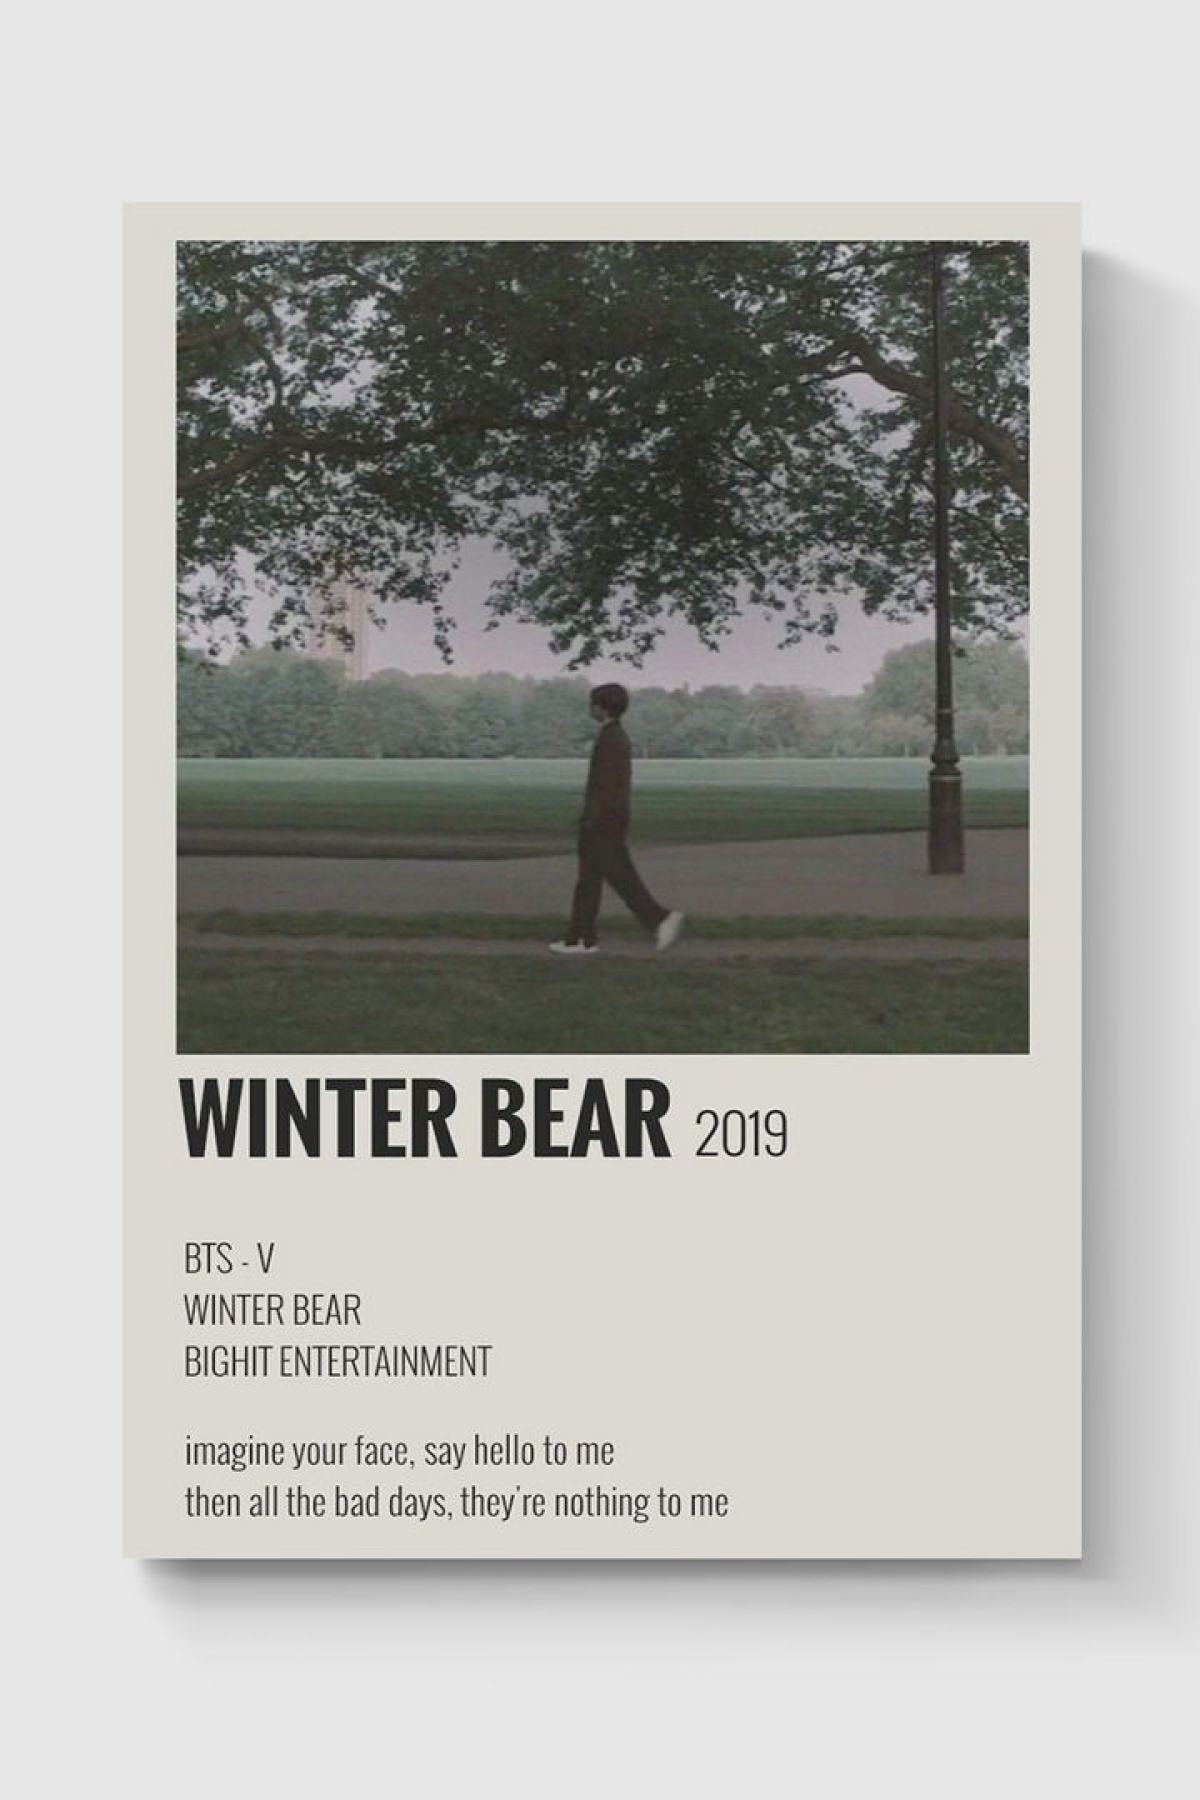 DuoArt Bts - V Winter Bear Kpop K-pop Info Card Bilgi Kartı Minimalist Poster